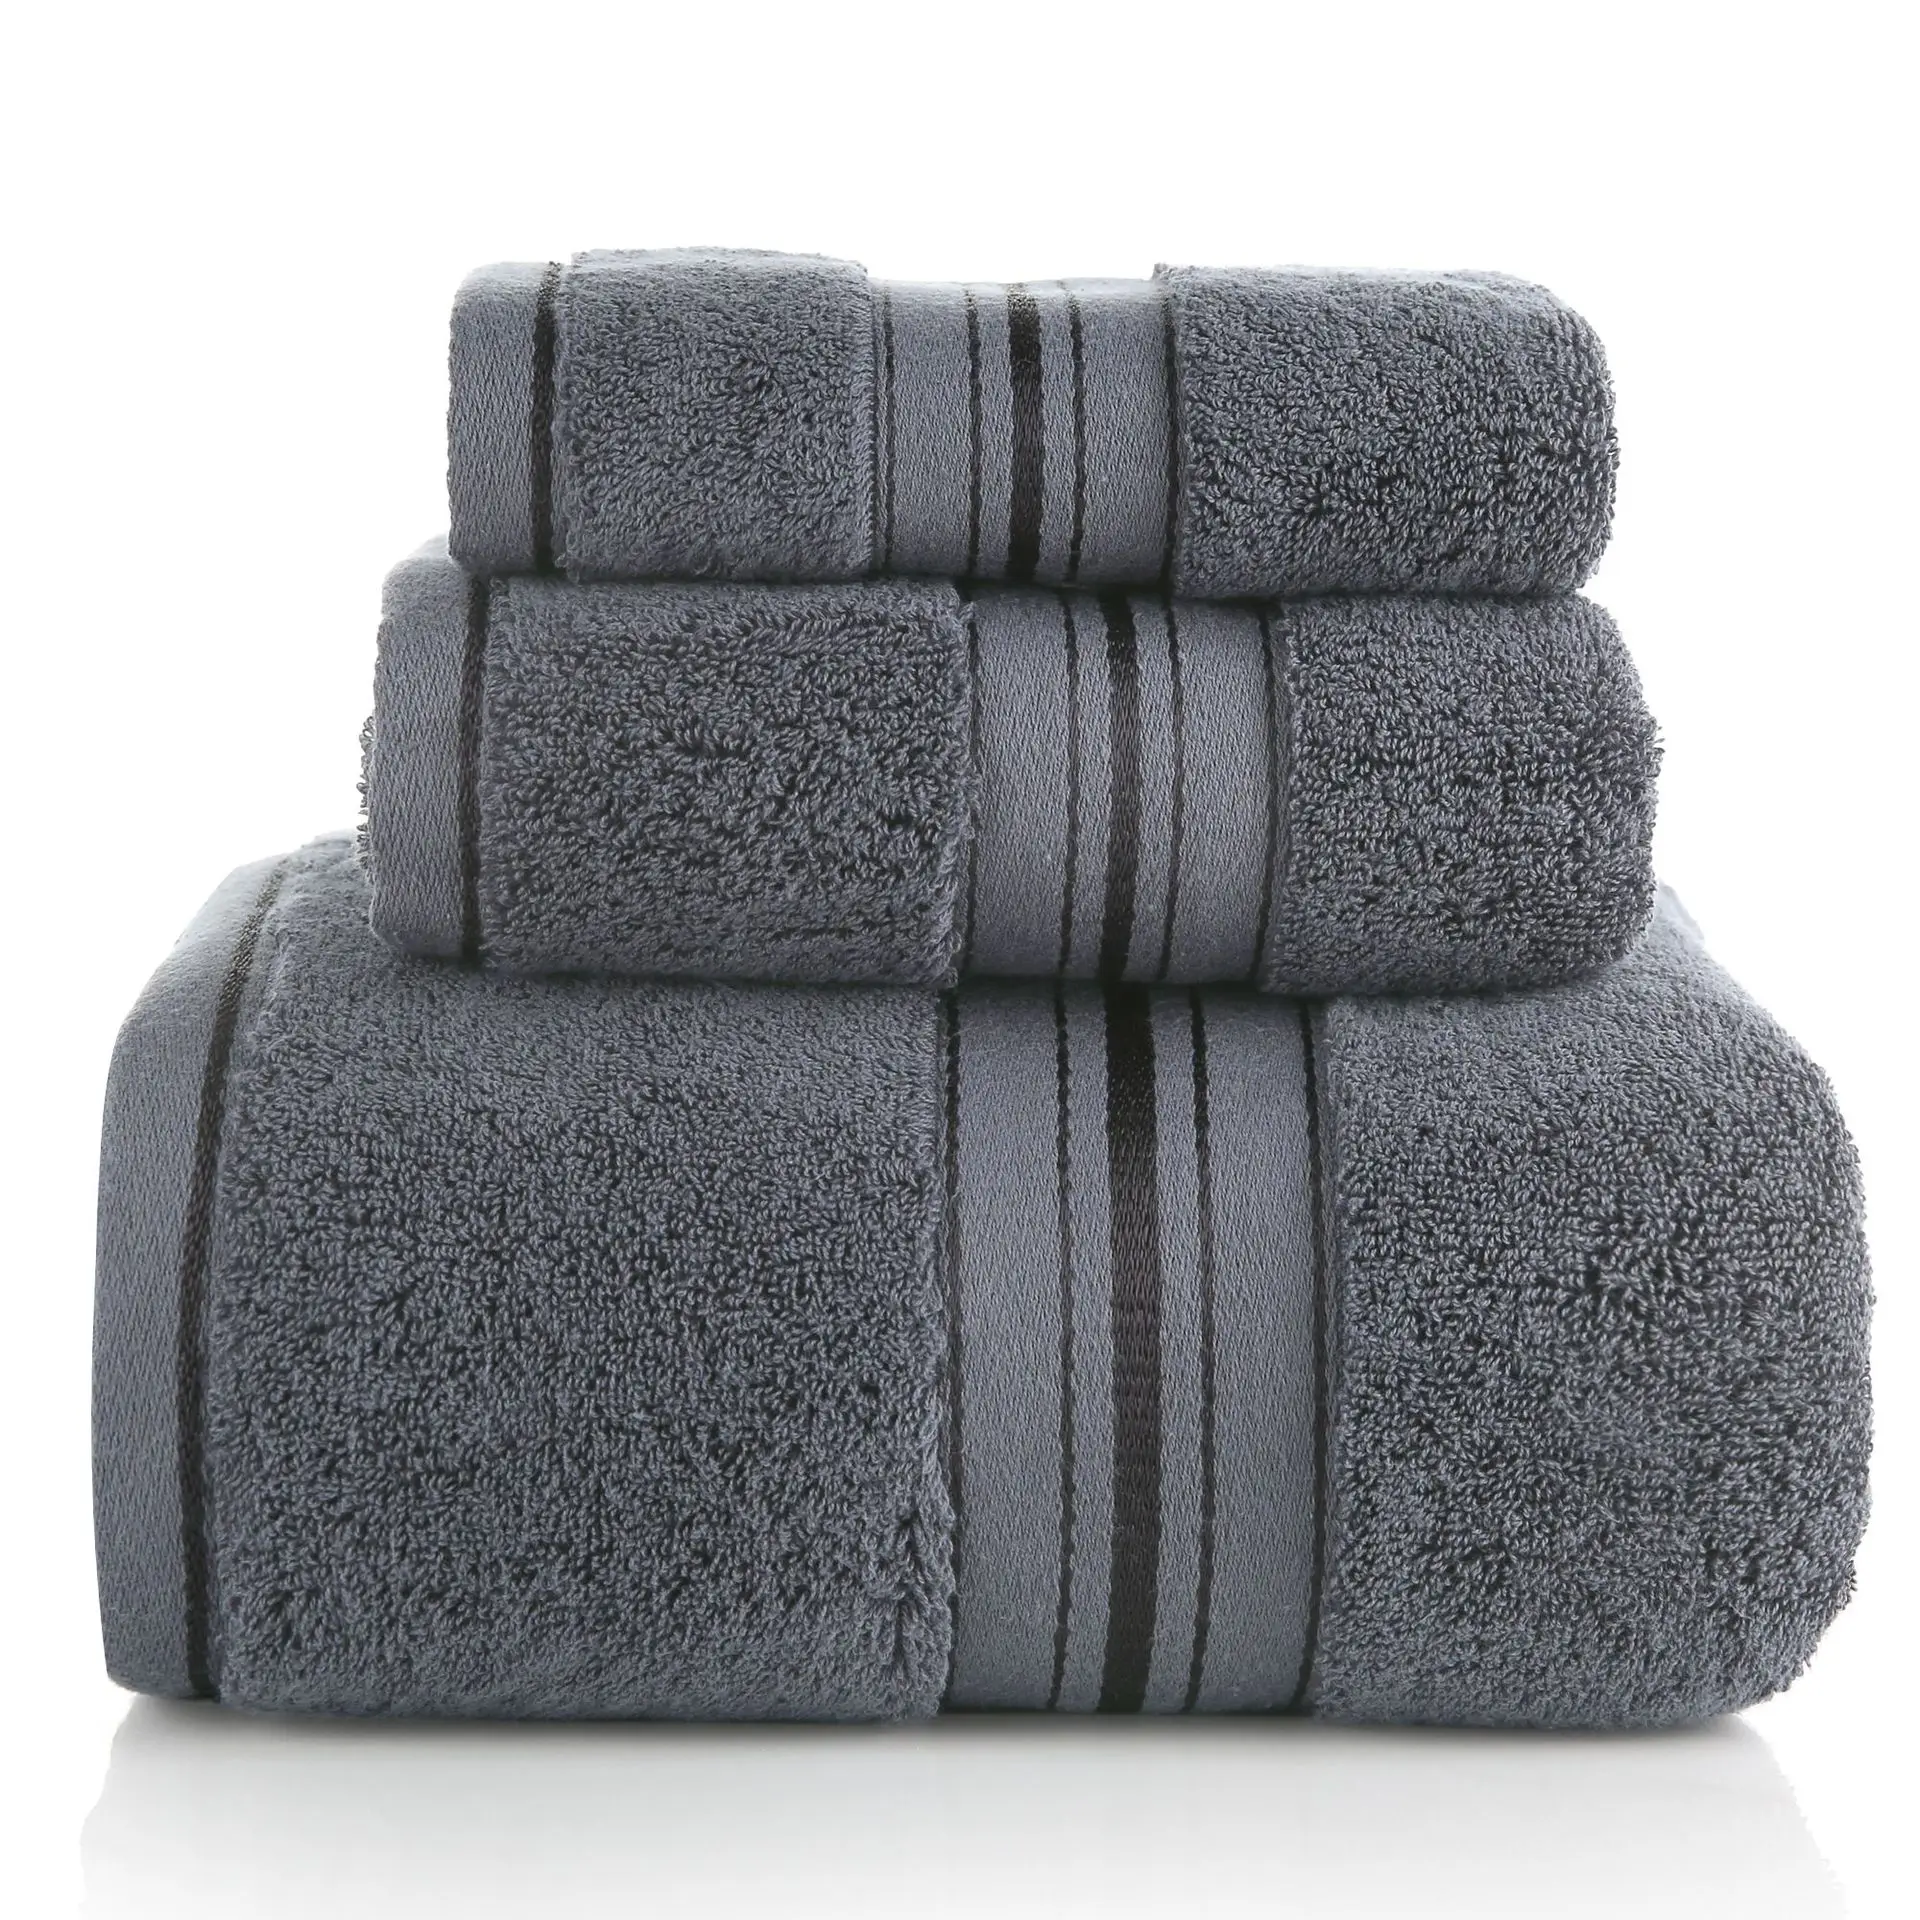 70x140cm 100% Cotton Bath Towel Beach Absorbent Drying Washcloth Shower Towel US 